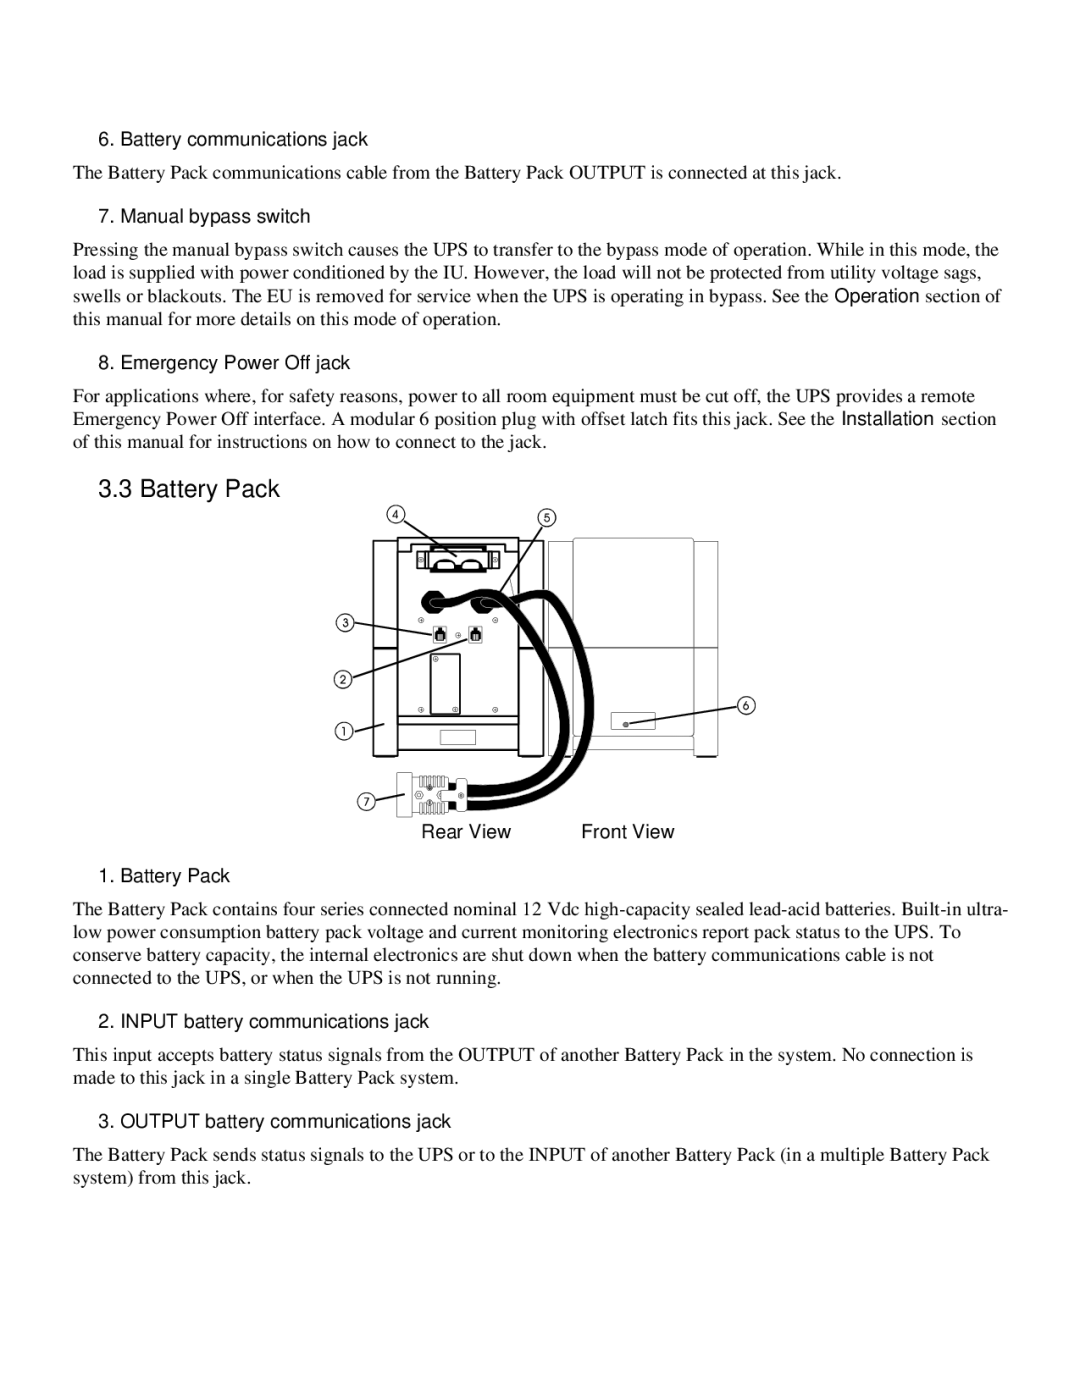 American Power Conversion MatrixTM UPS user manual Battery Pack, Rear View 